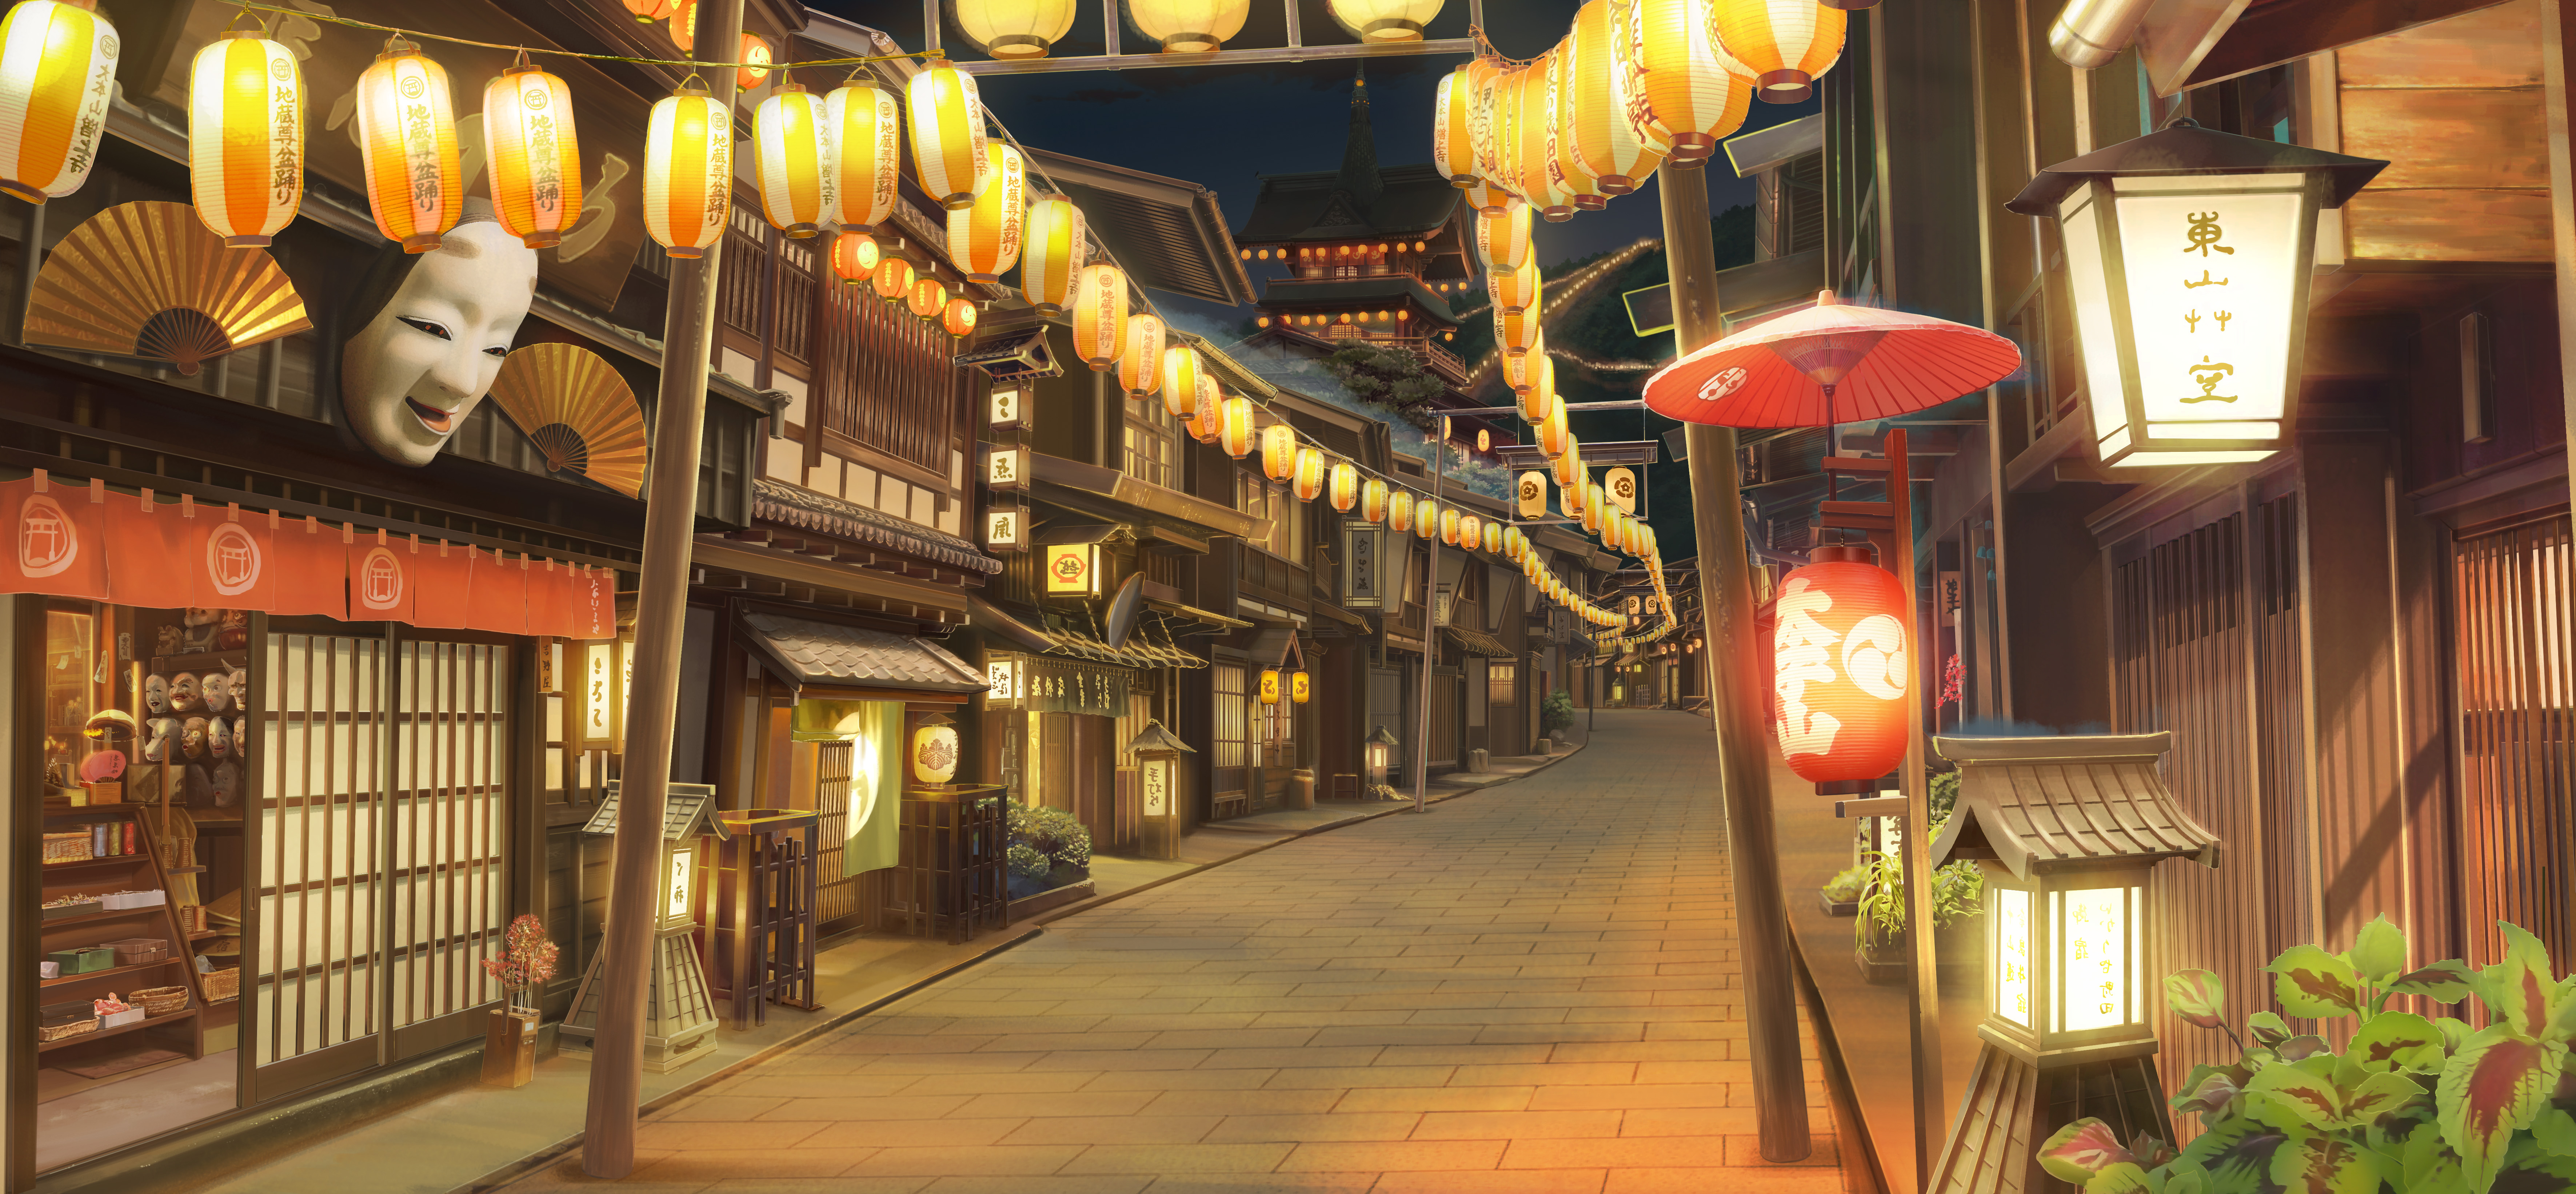 General 7083x3282 digital art artwork illustration environment Japan architecture street light paper lantern lantern mask night umbrella street sky lanterns lights leaves